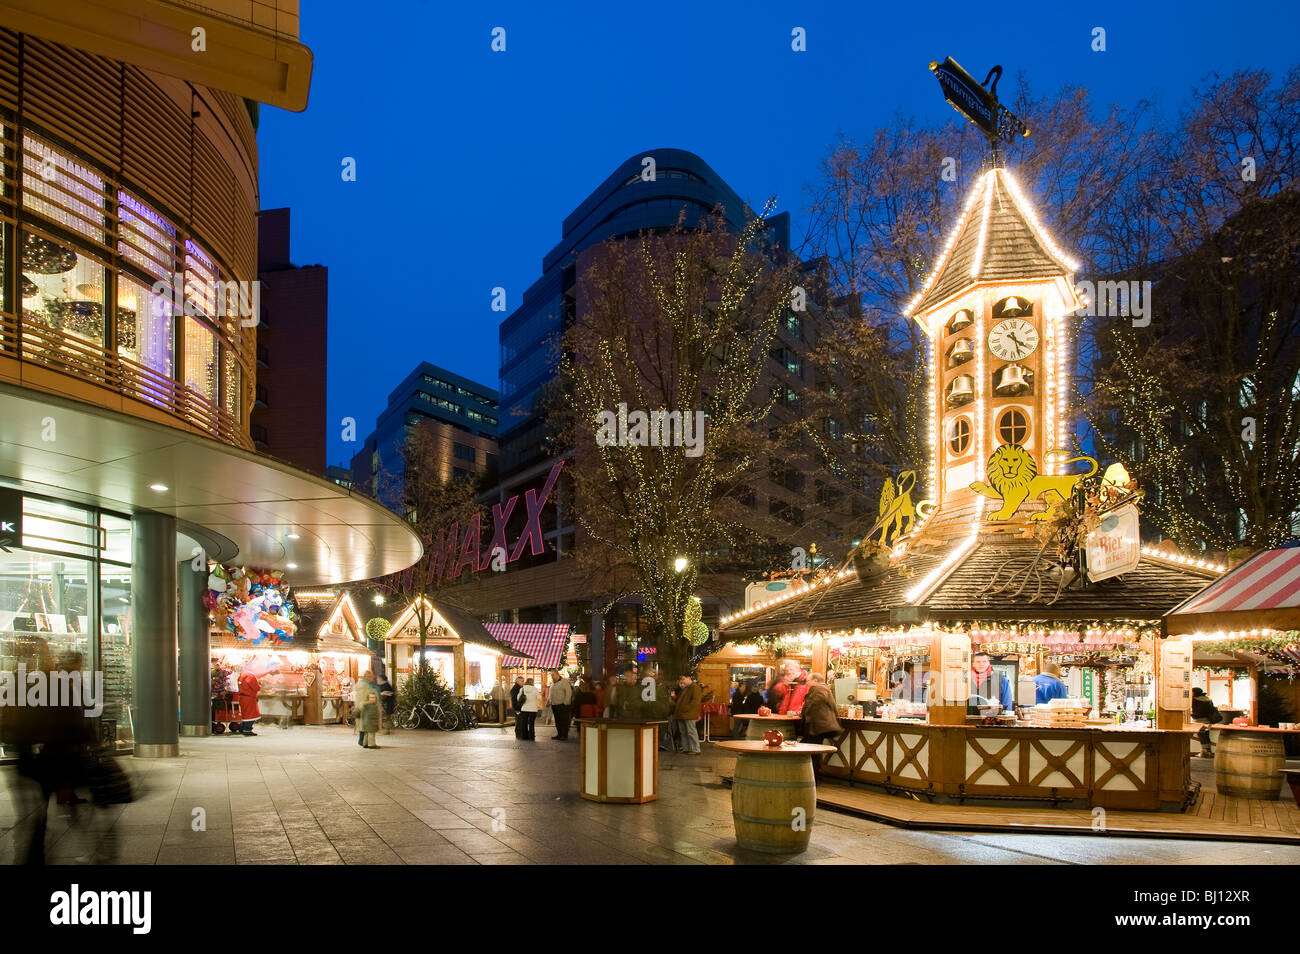 Christmas Markets Potsdamer Platz Berlin Germany Stock Photo